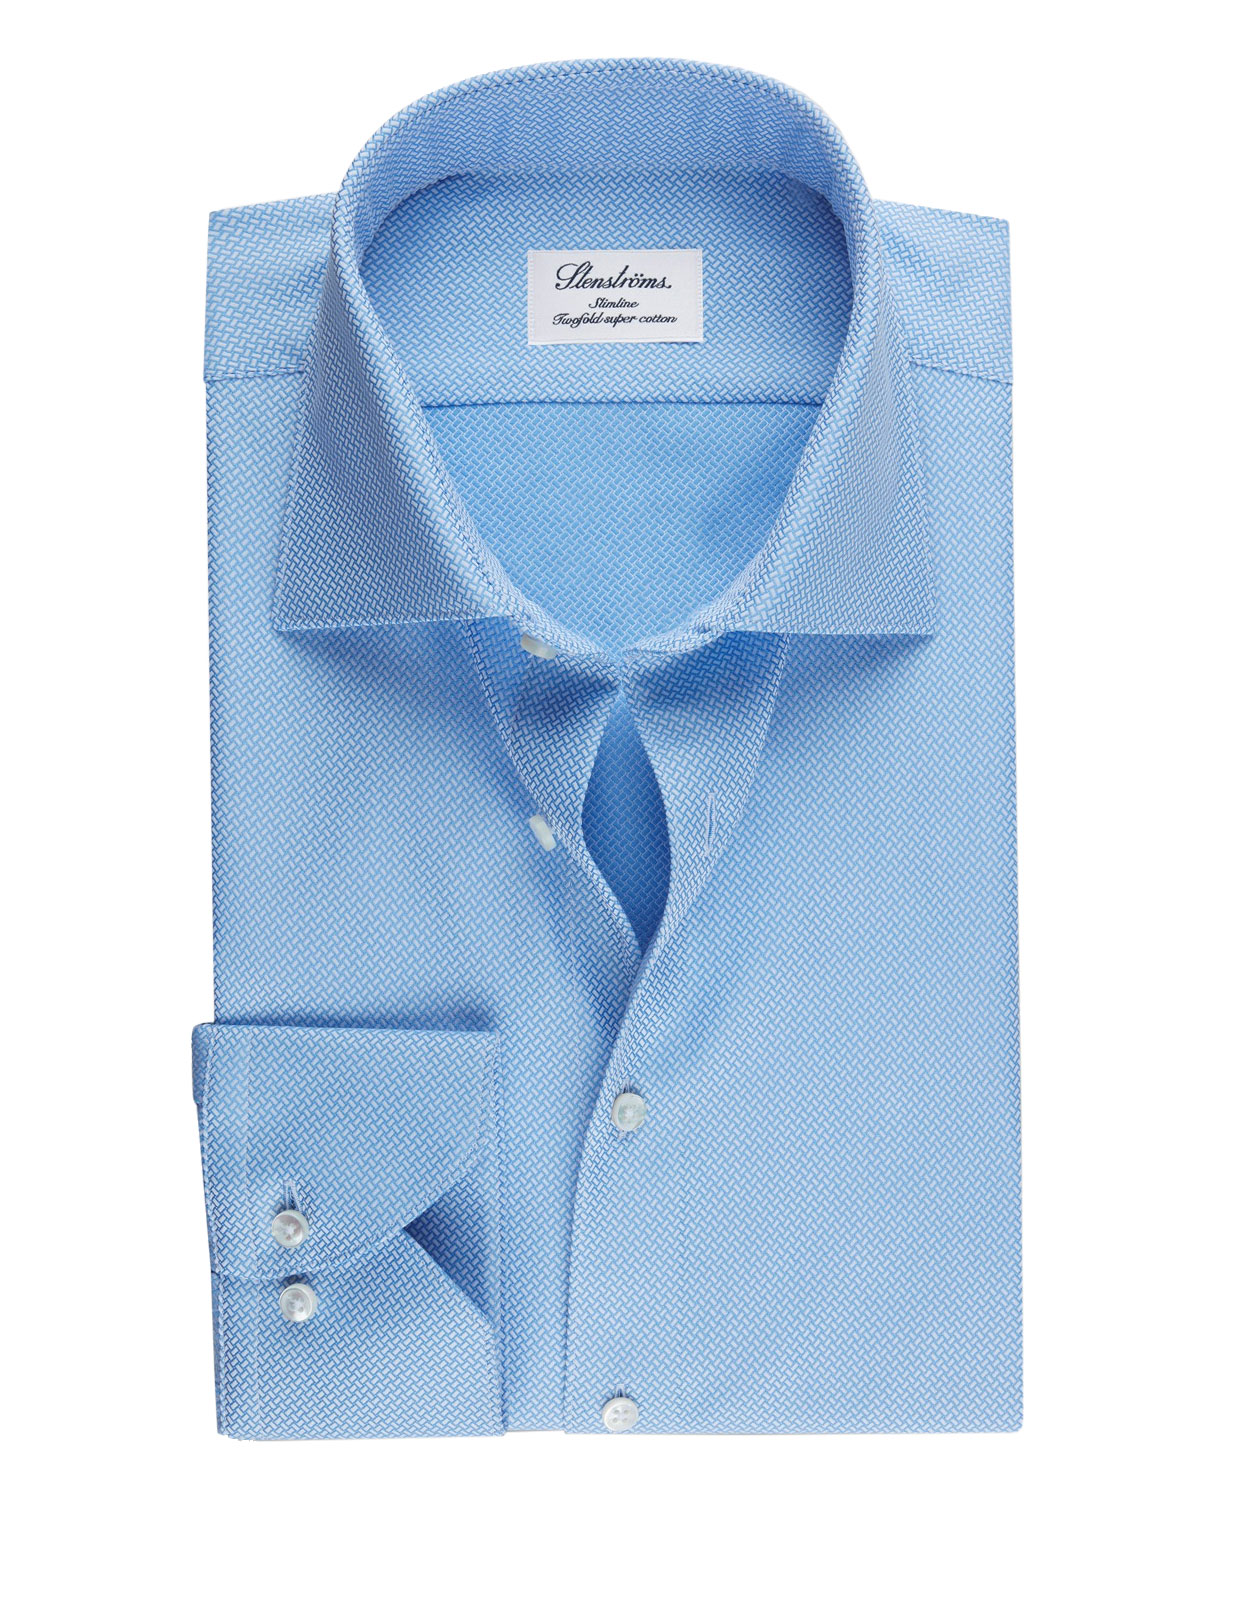 Slimline Shirt Textured Light Blue